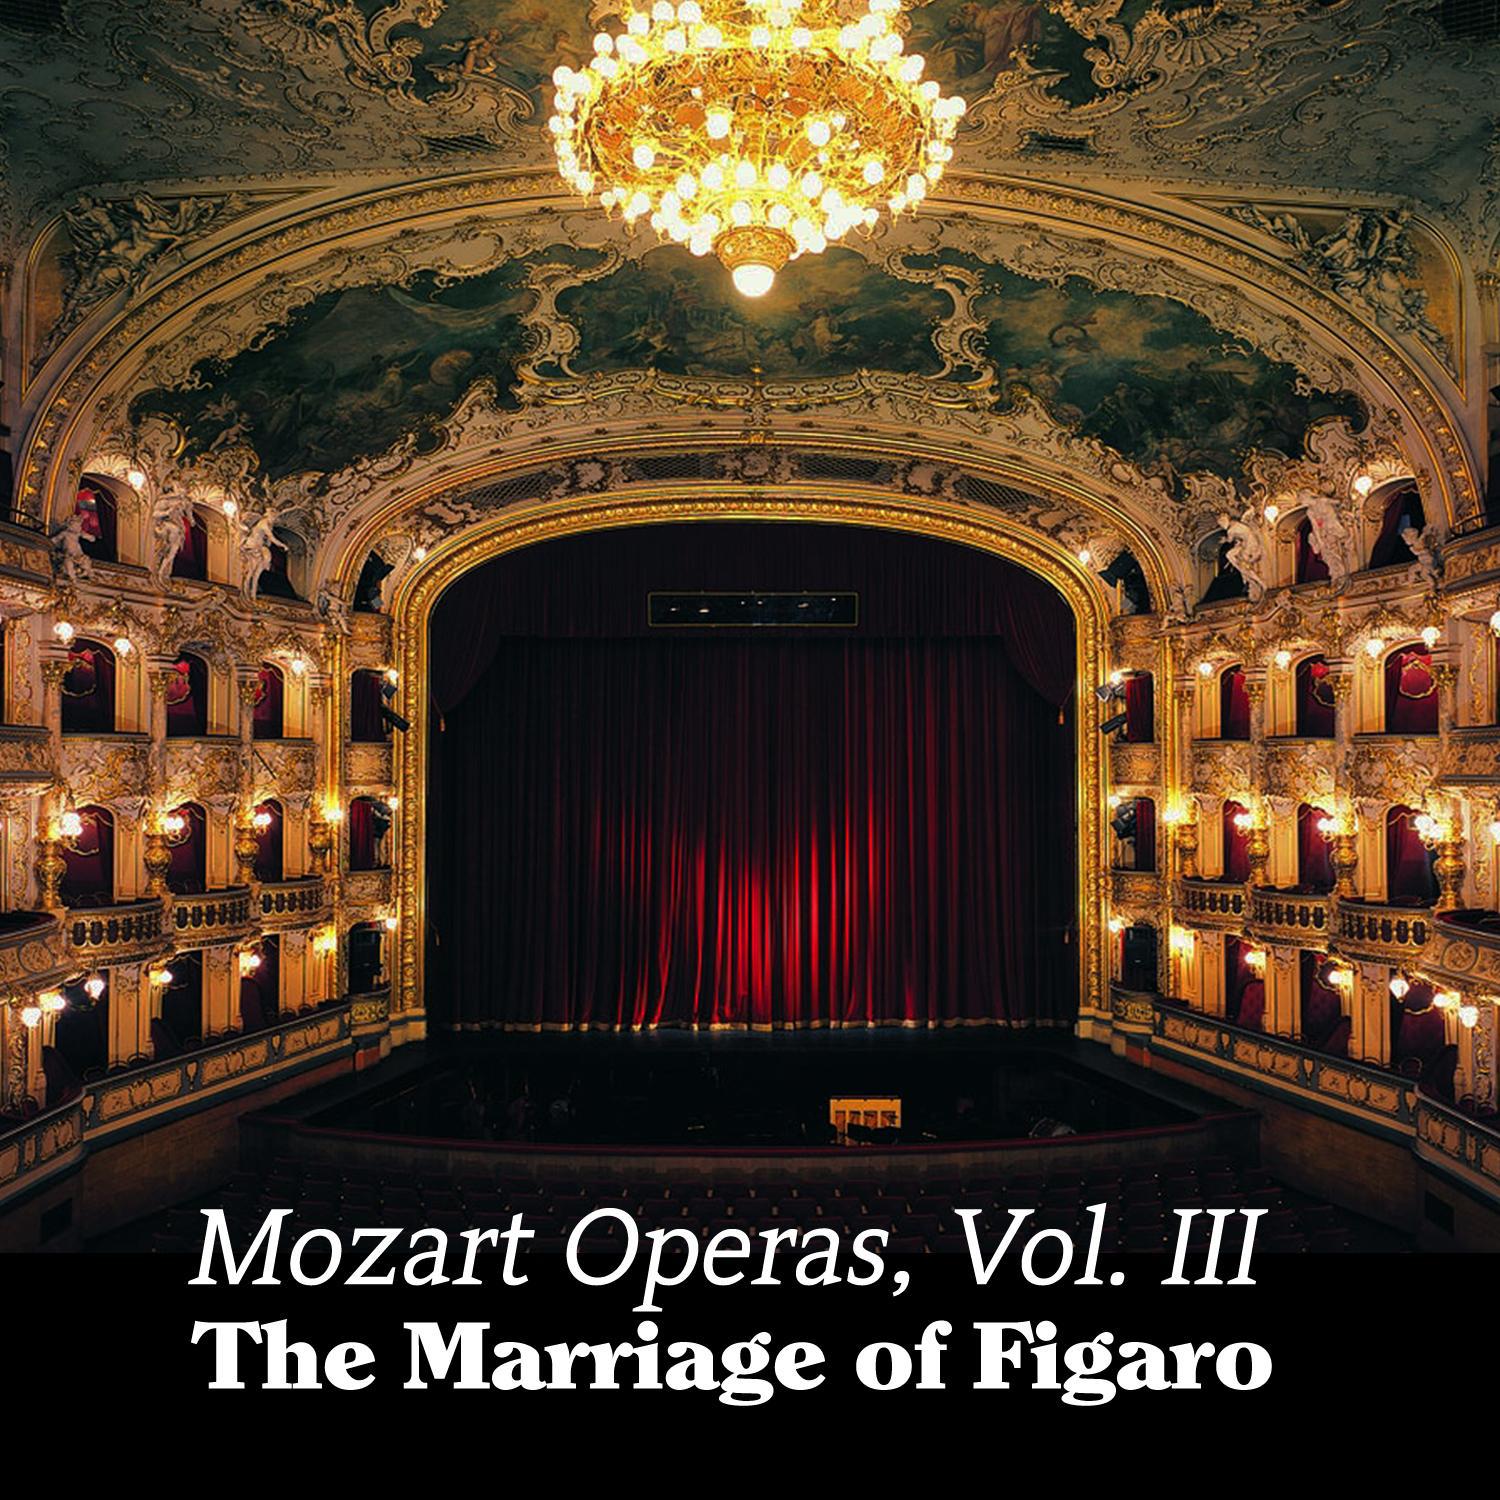 Mozart Operas Vol. III: The Marriage of Figaro